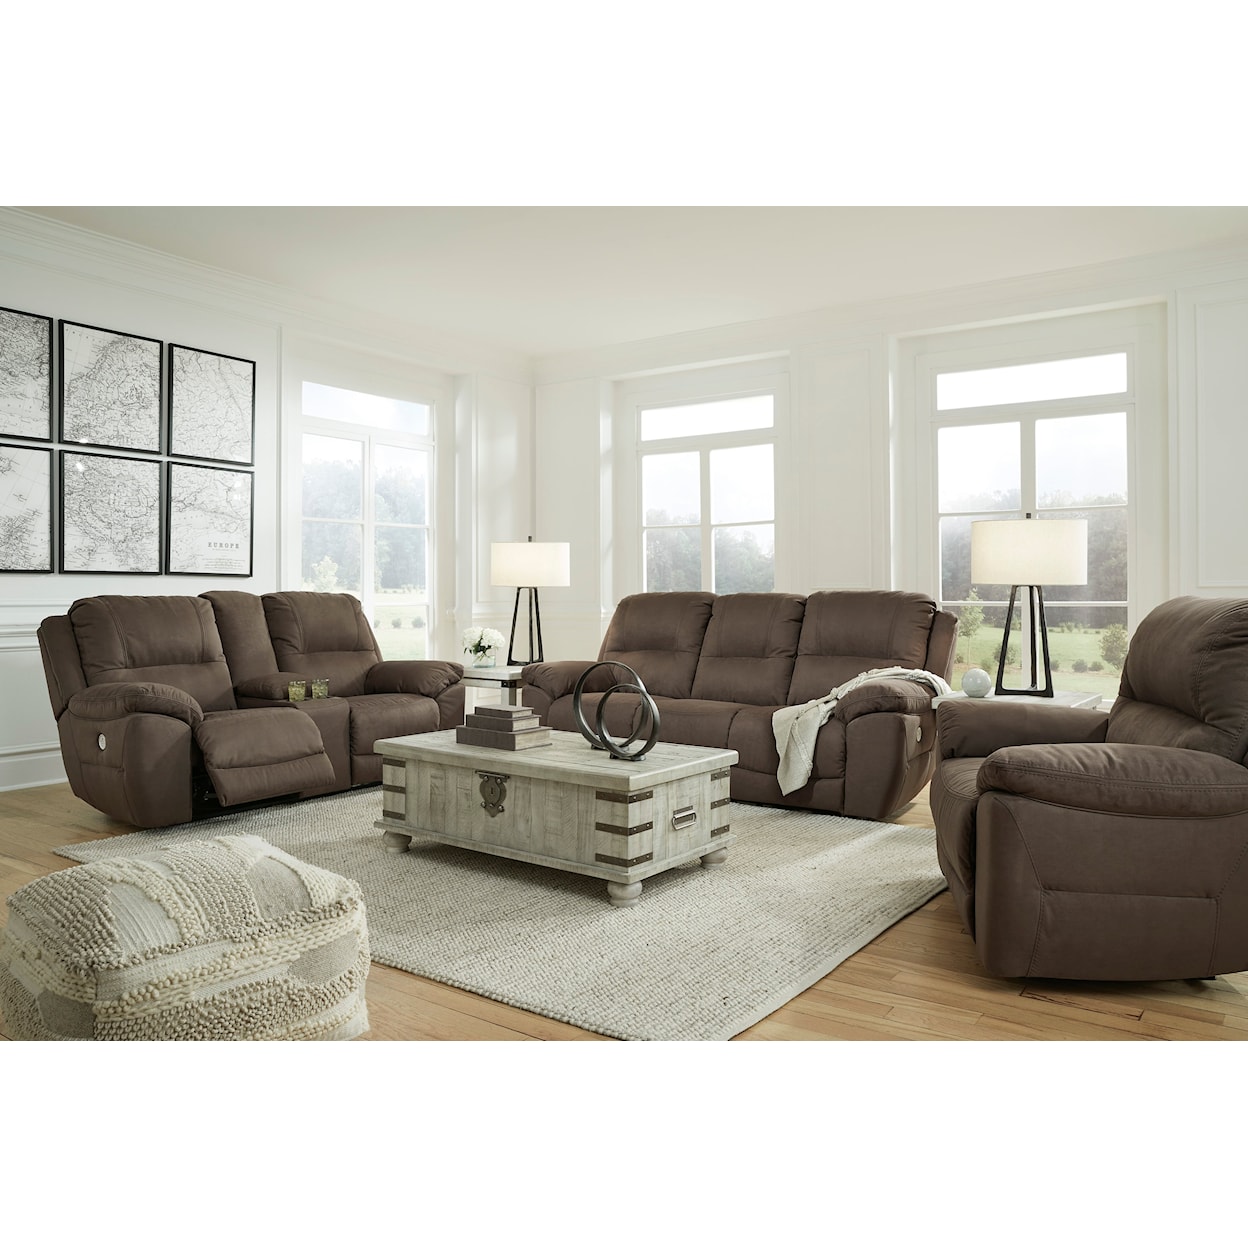 Ashley Furniture Signature Design Next-Gen Gaucho Living Room Set